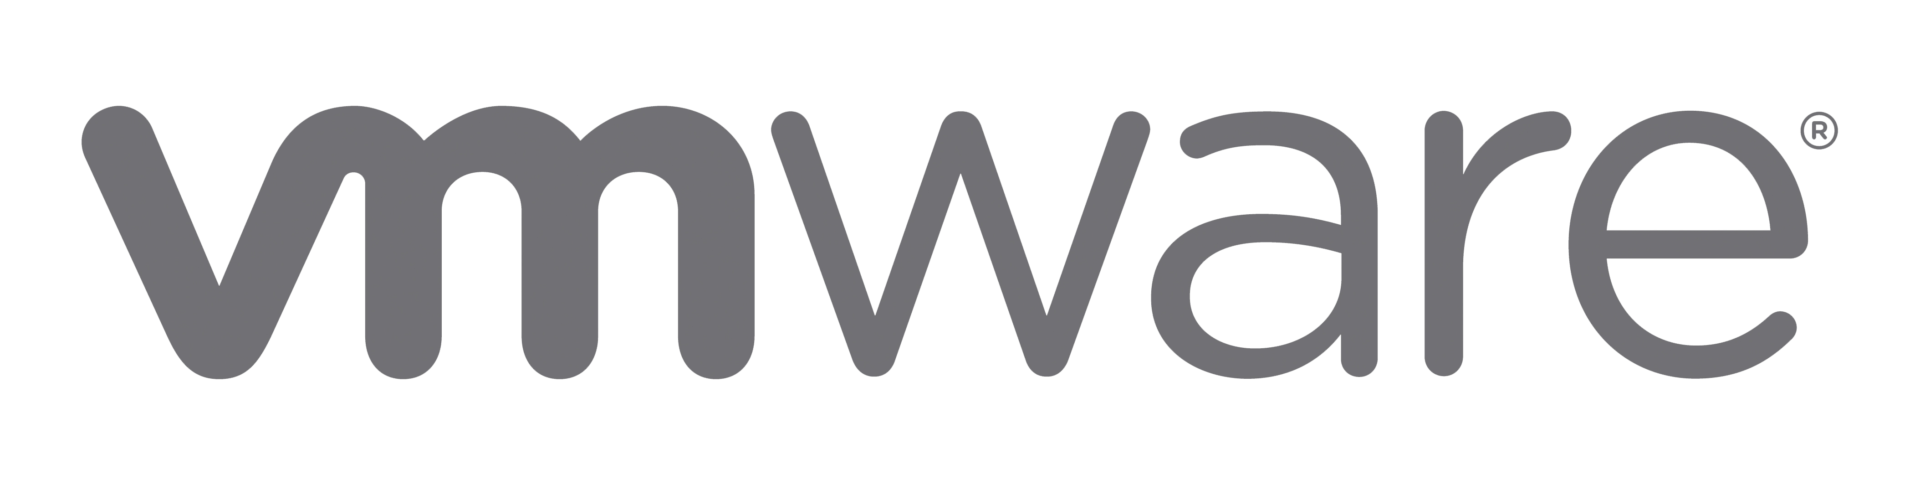 vmware-png-logo-